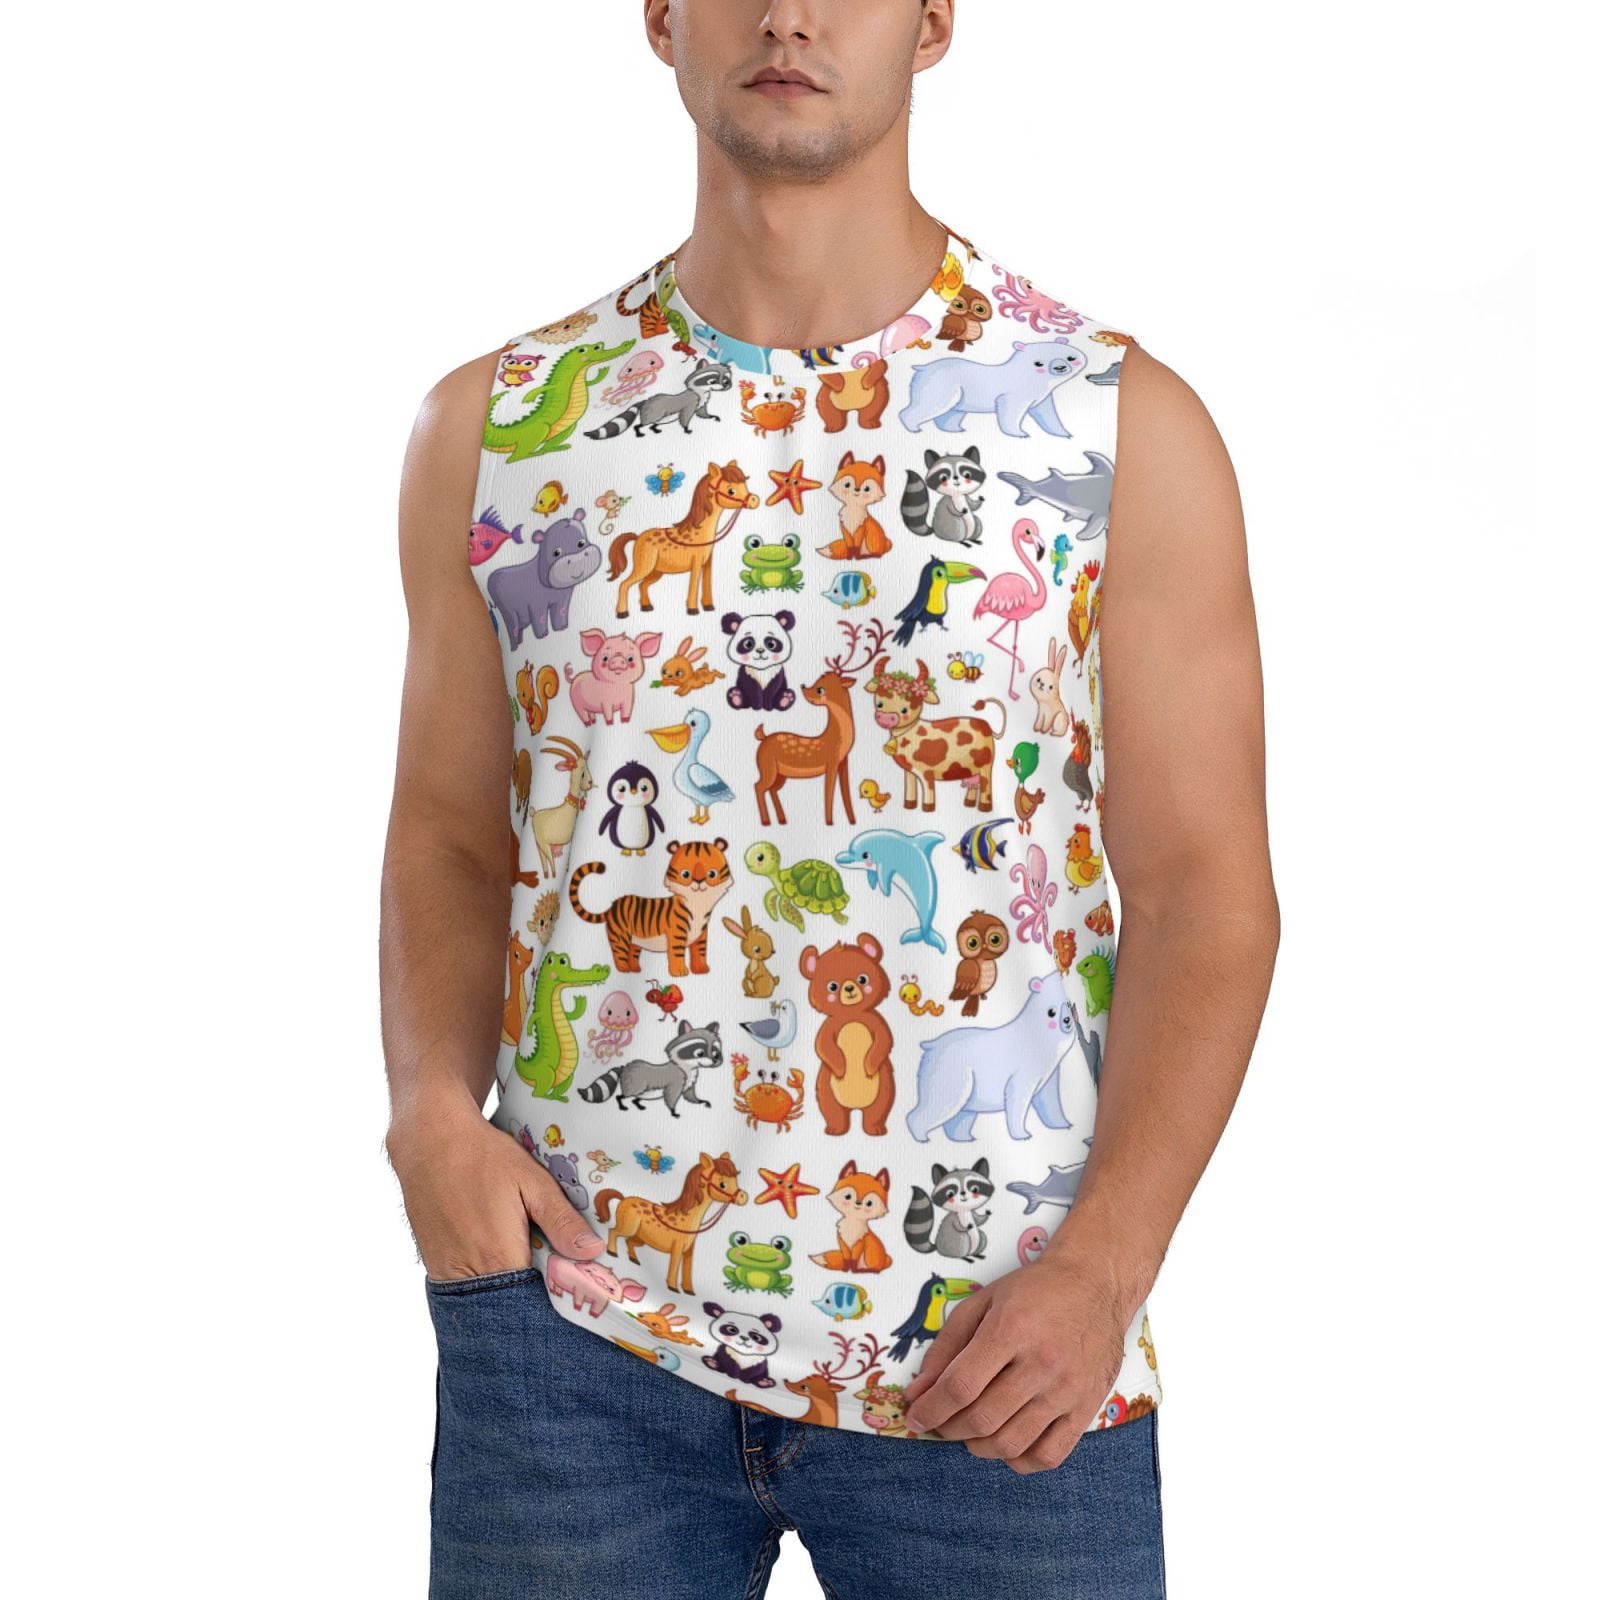 Disketp Animal Cartoon Style Sleeveless Tshirts For Men, Muscle Shirts ...